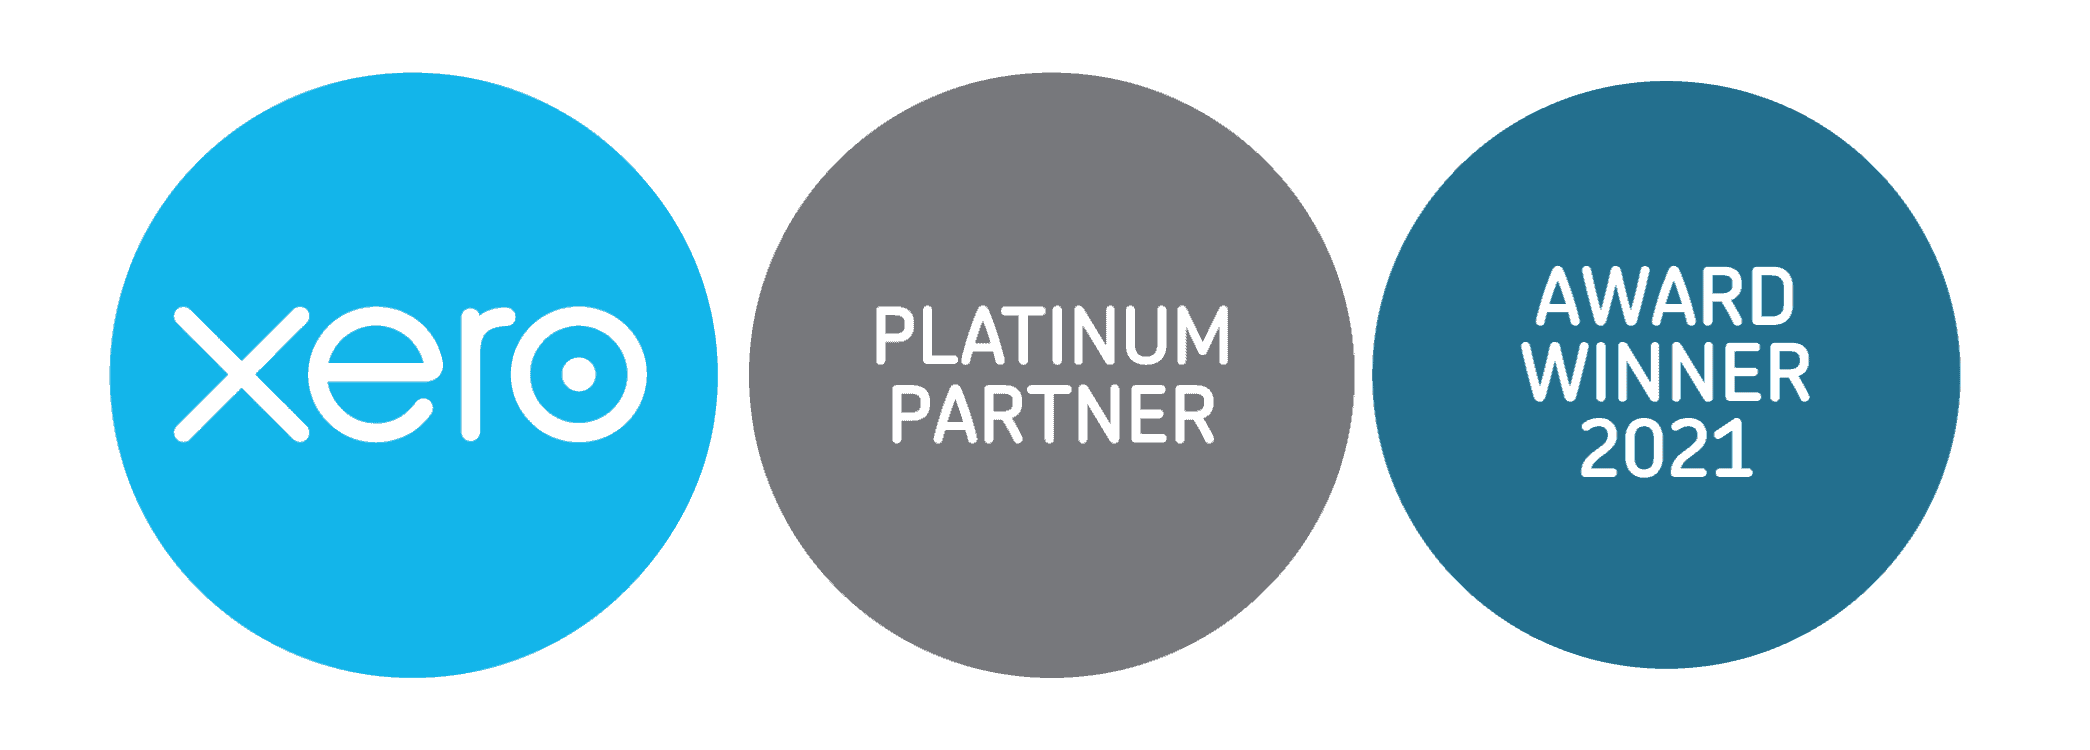 Platinum partner & award winner 2021